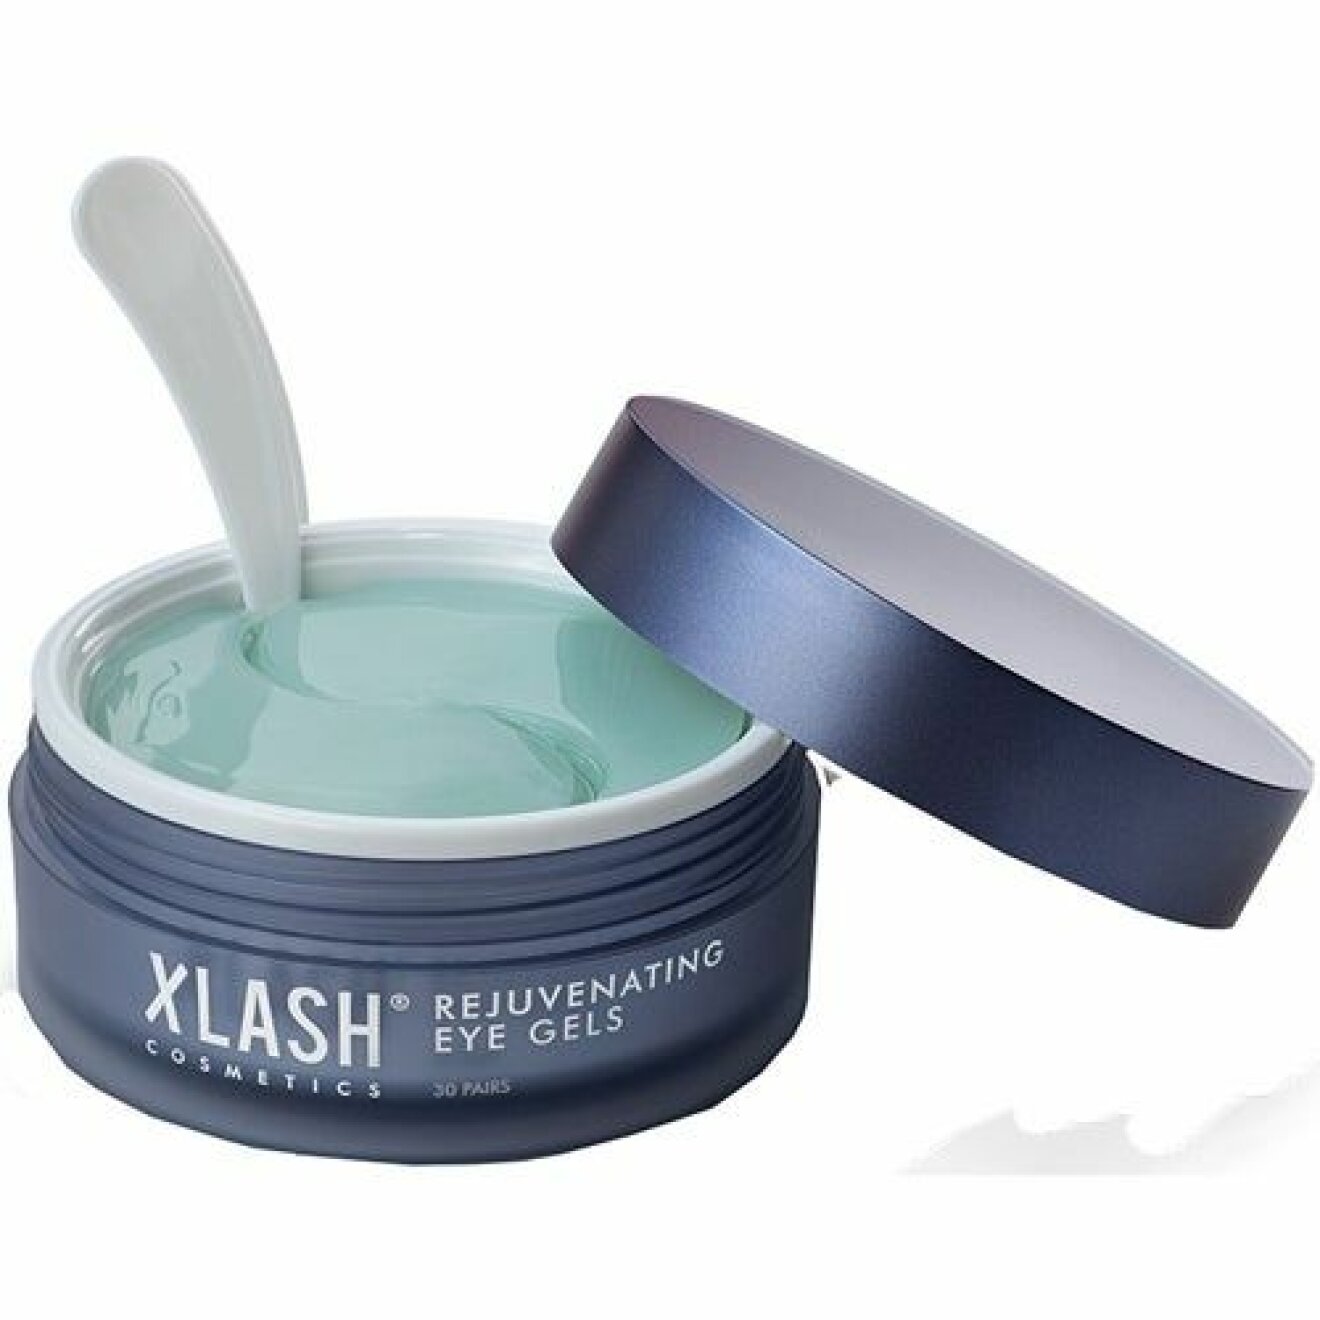 Rejuvanating eye gels, Xlash